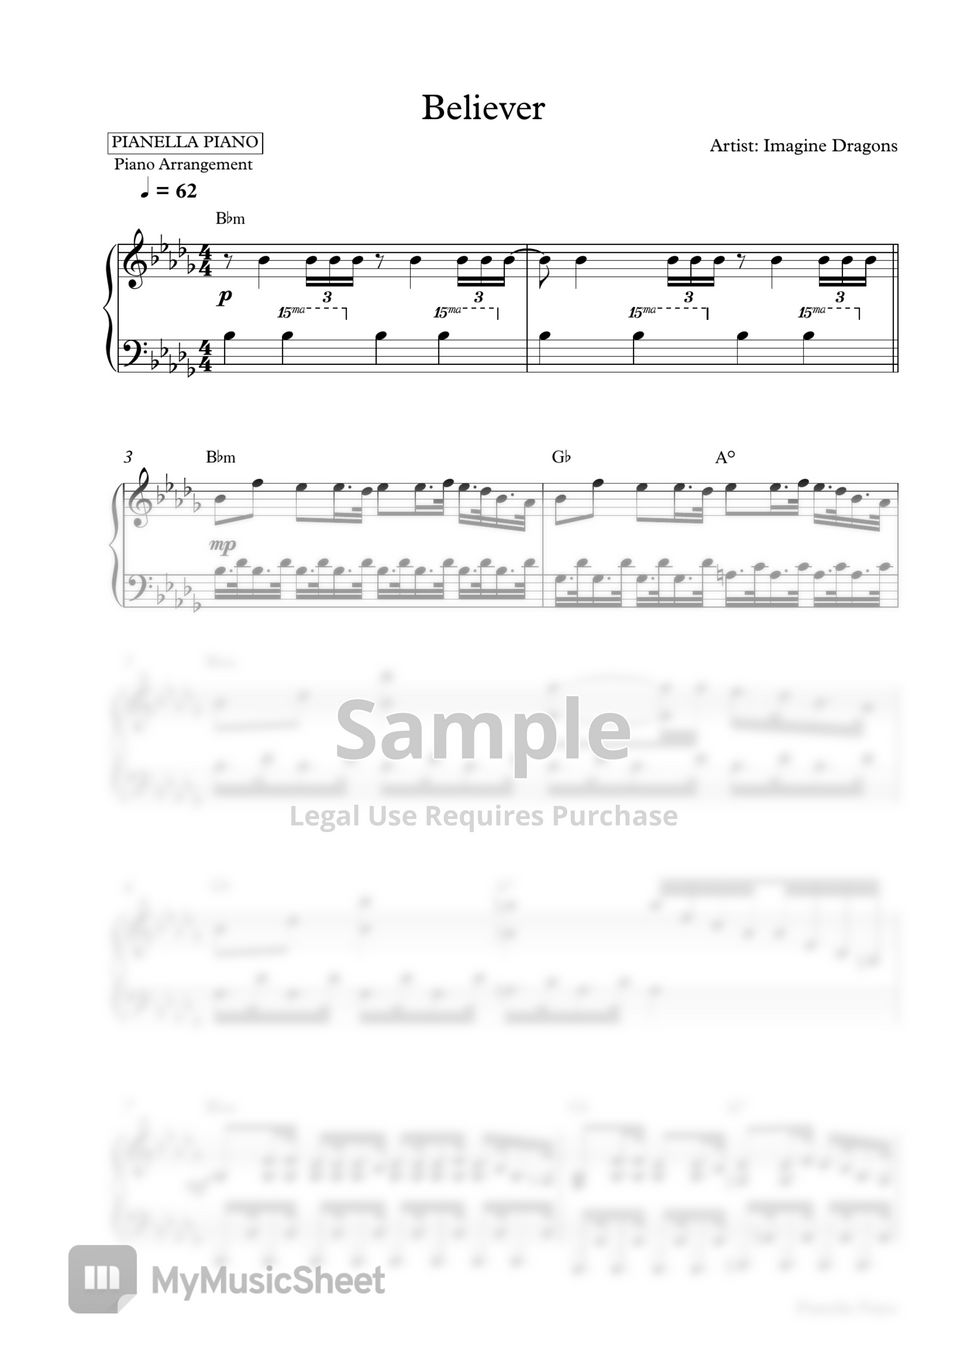 Imagine Dragons - Believer (Piano Sheet) by Pianella Piano